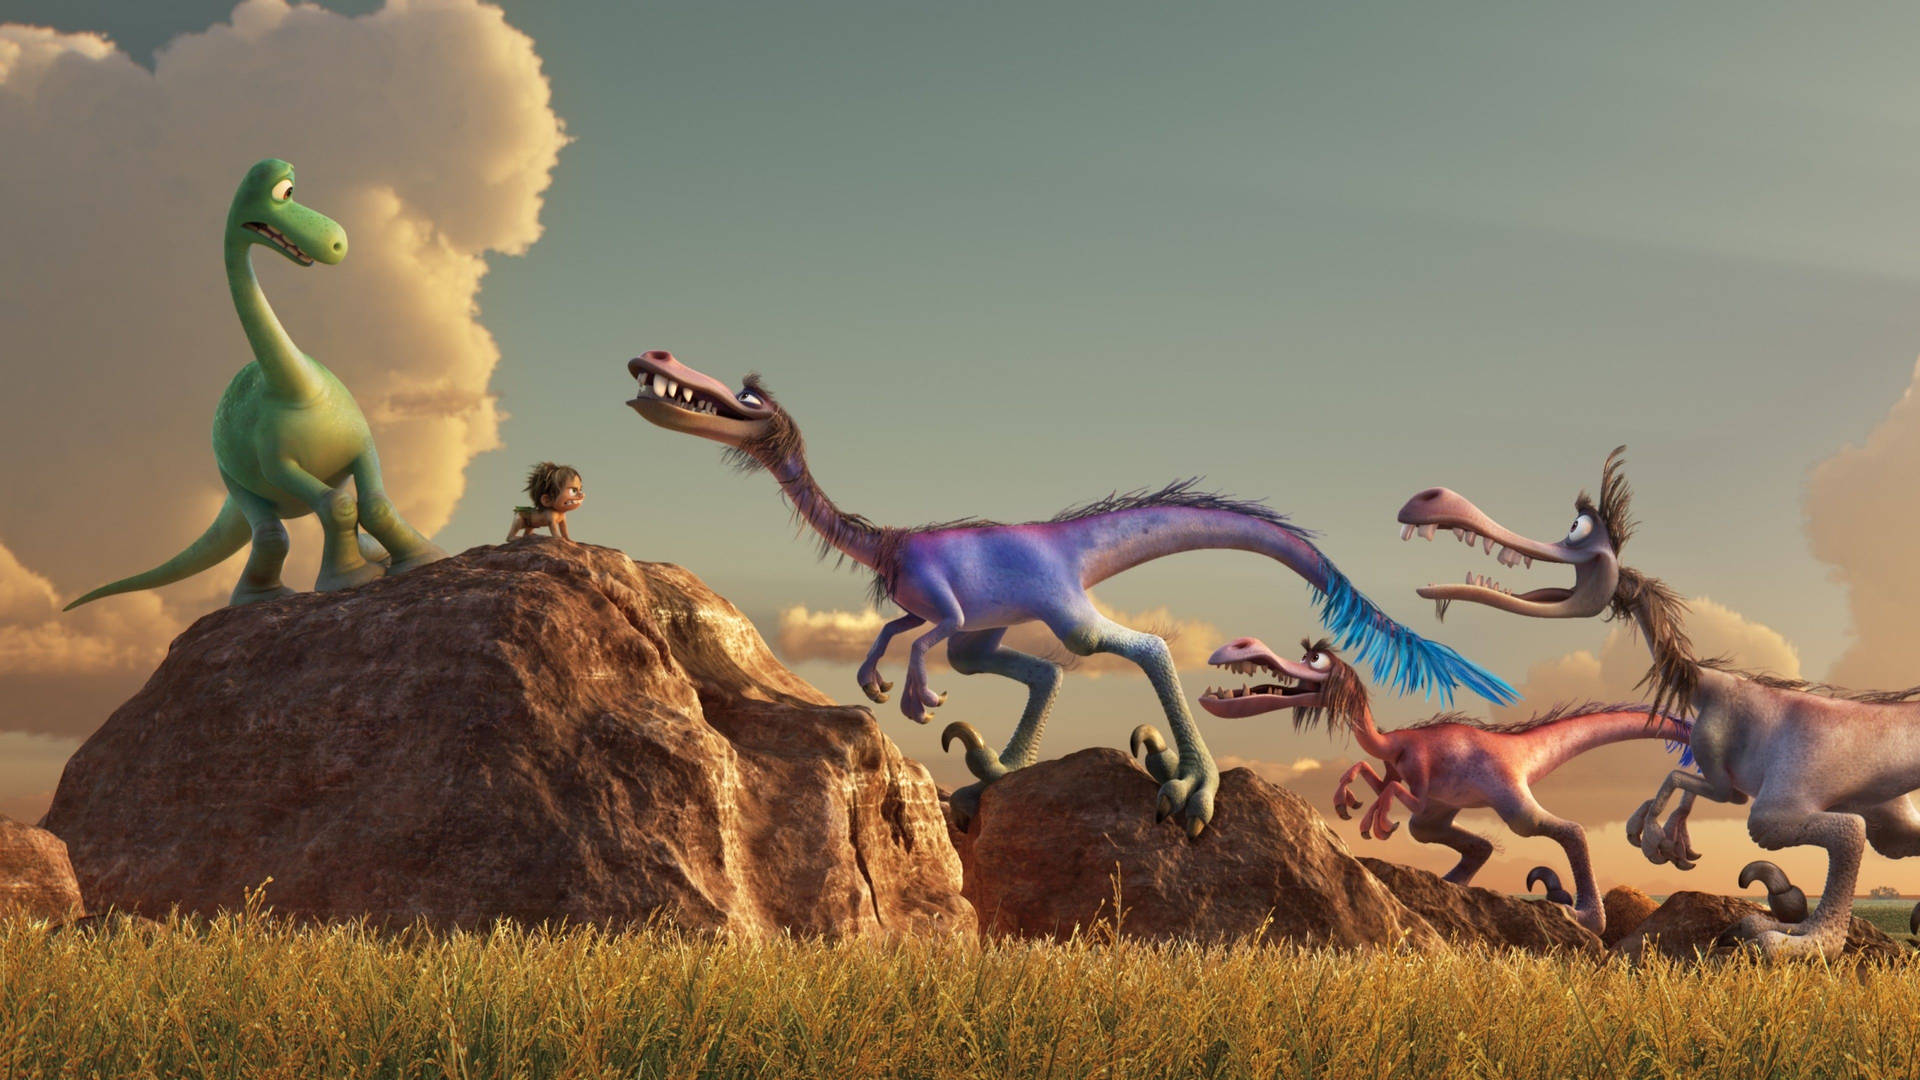 A 3D Dinosaur Against a Northern Lights Background Wallpaper